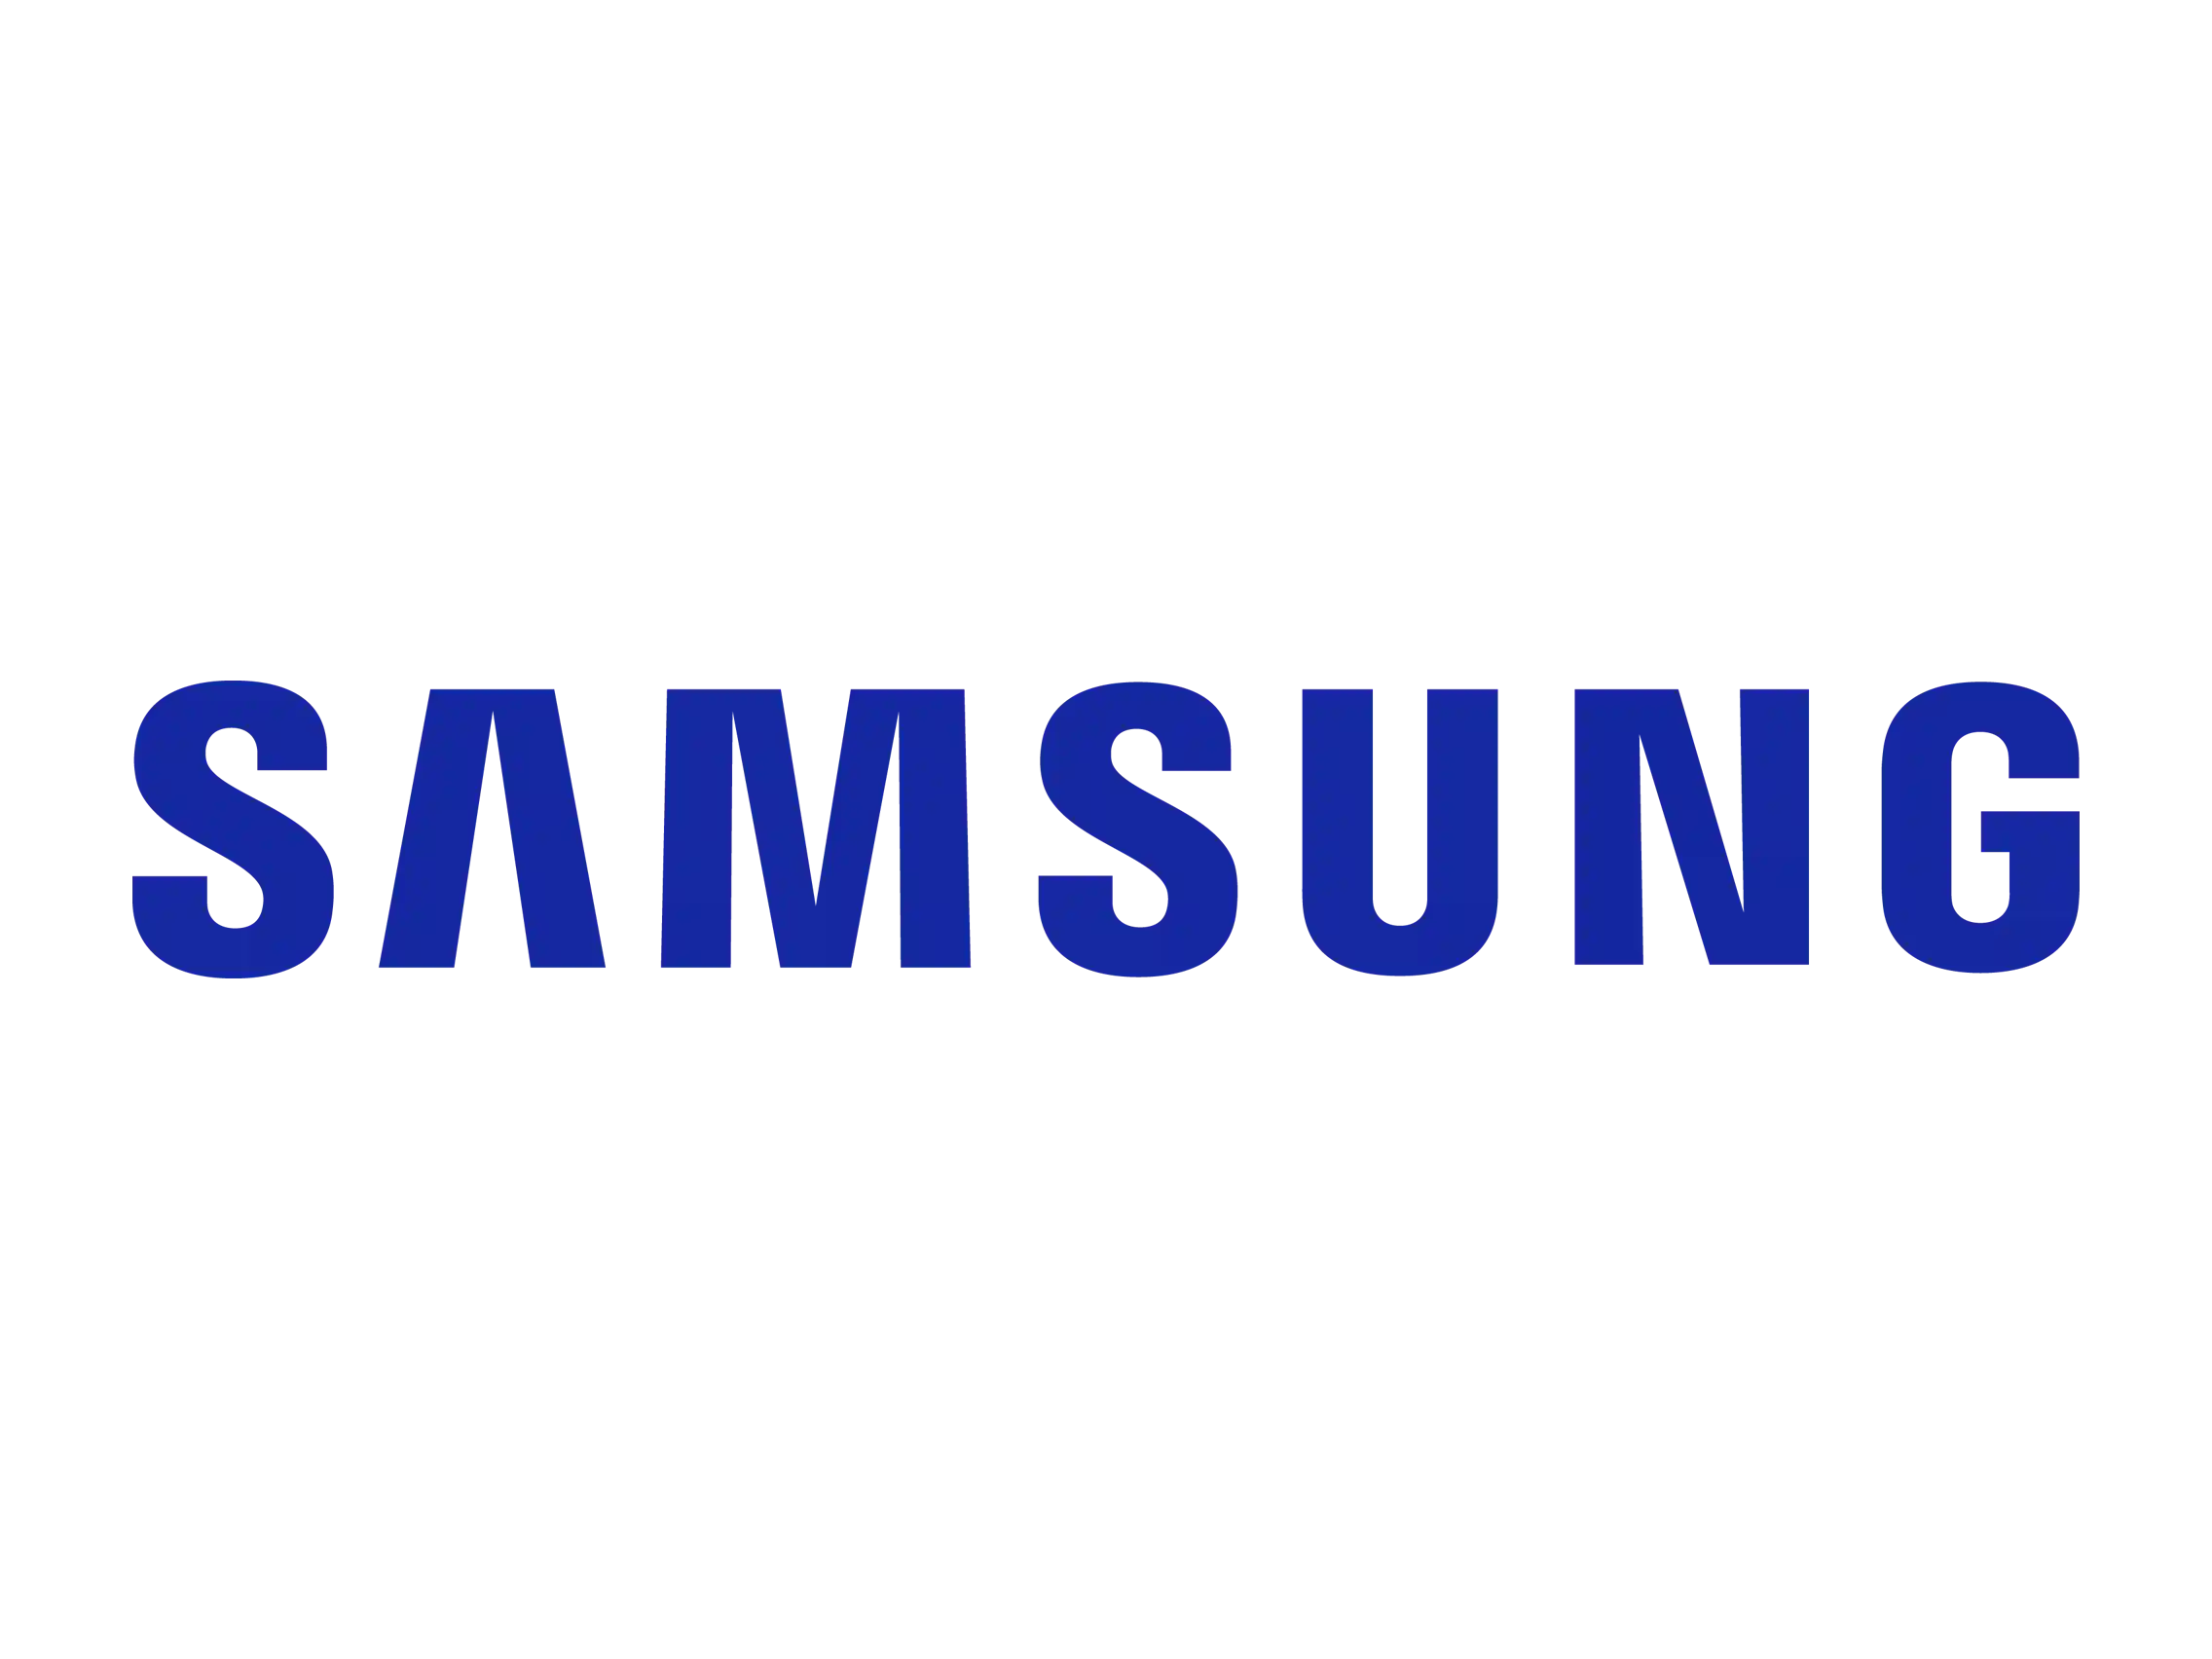 Samsung Rabattkode 